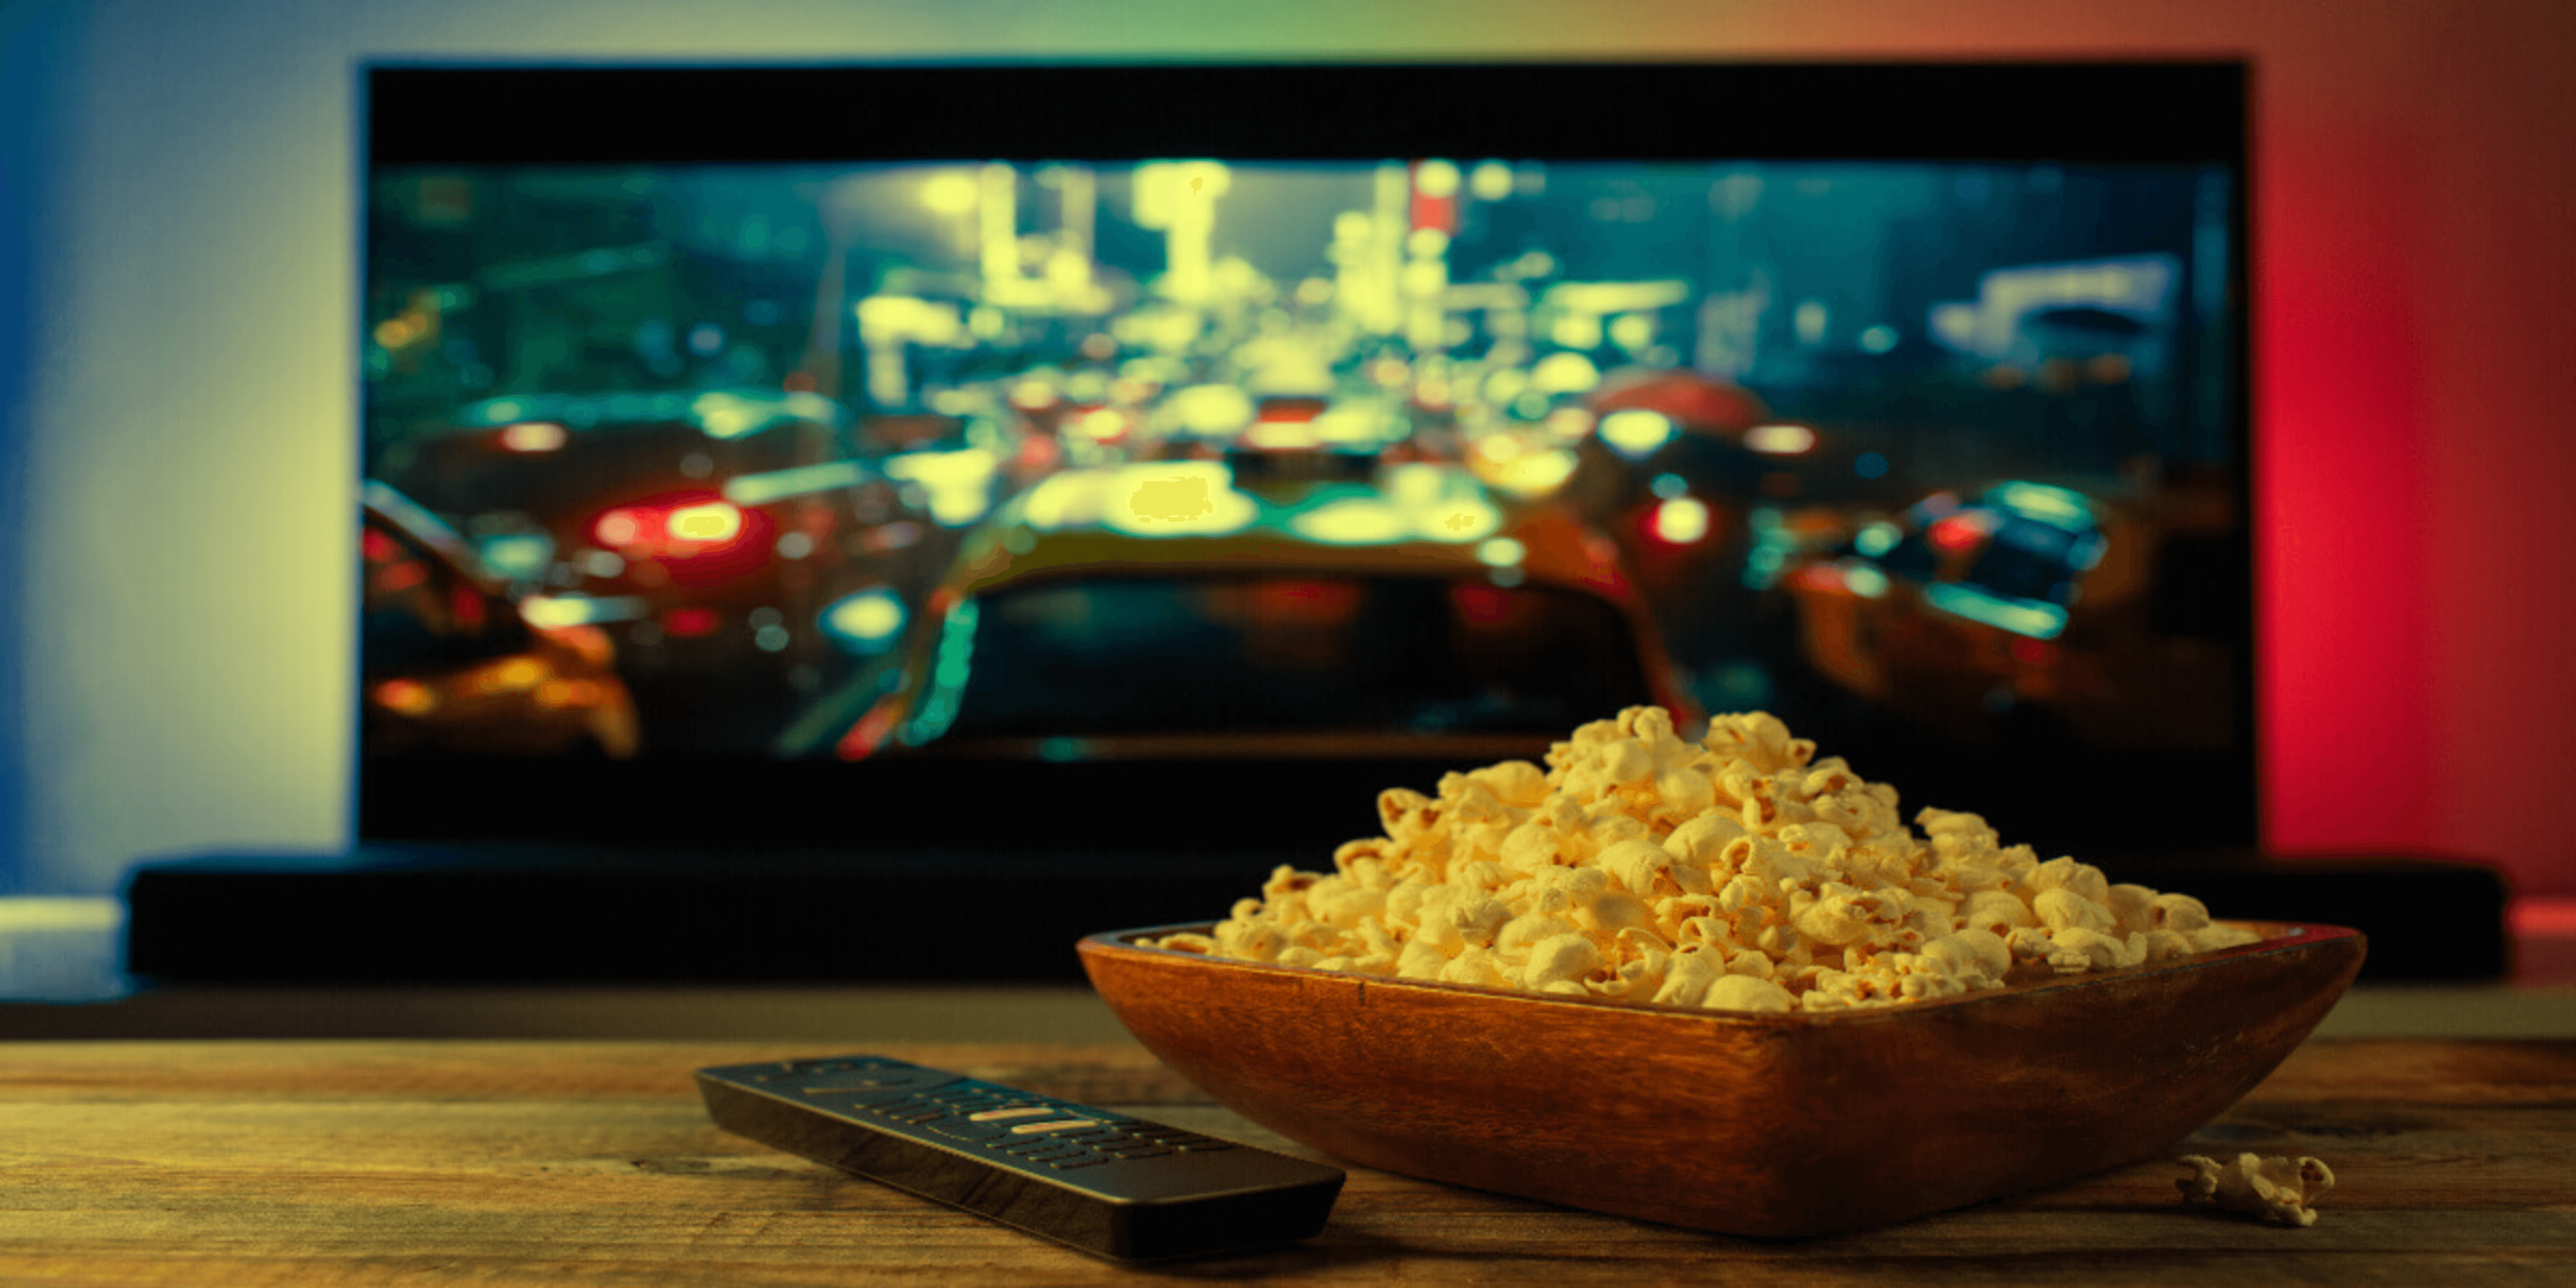 Popcorn ready to watch TV